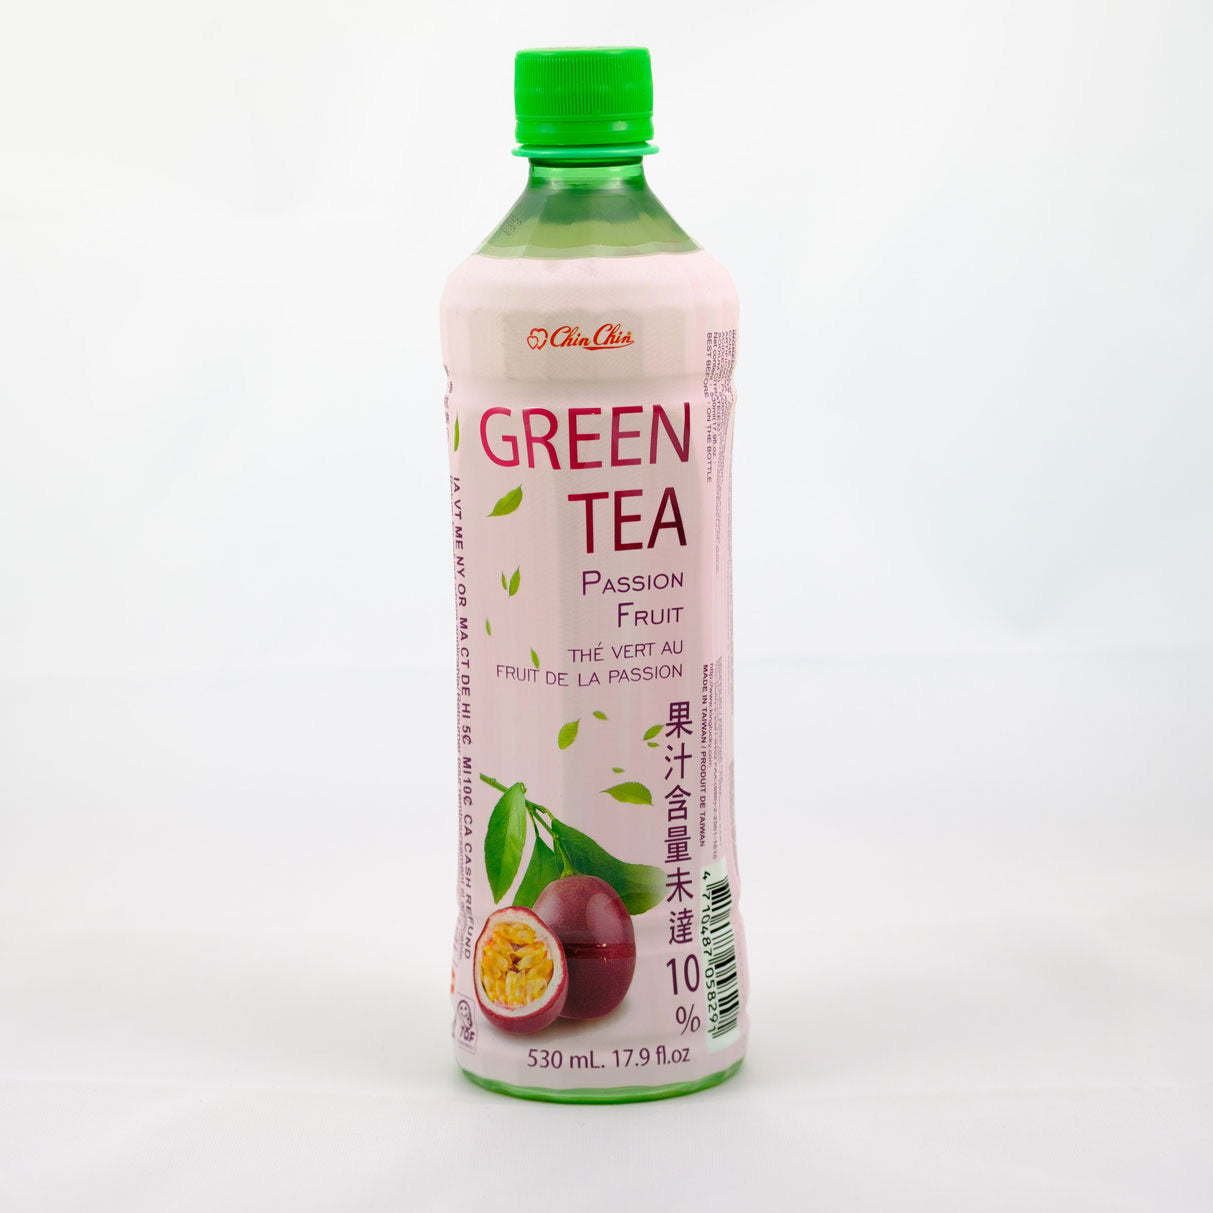 Chin Chin Passion Fruit Green Tea